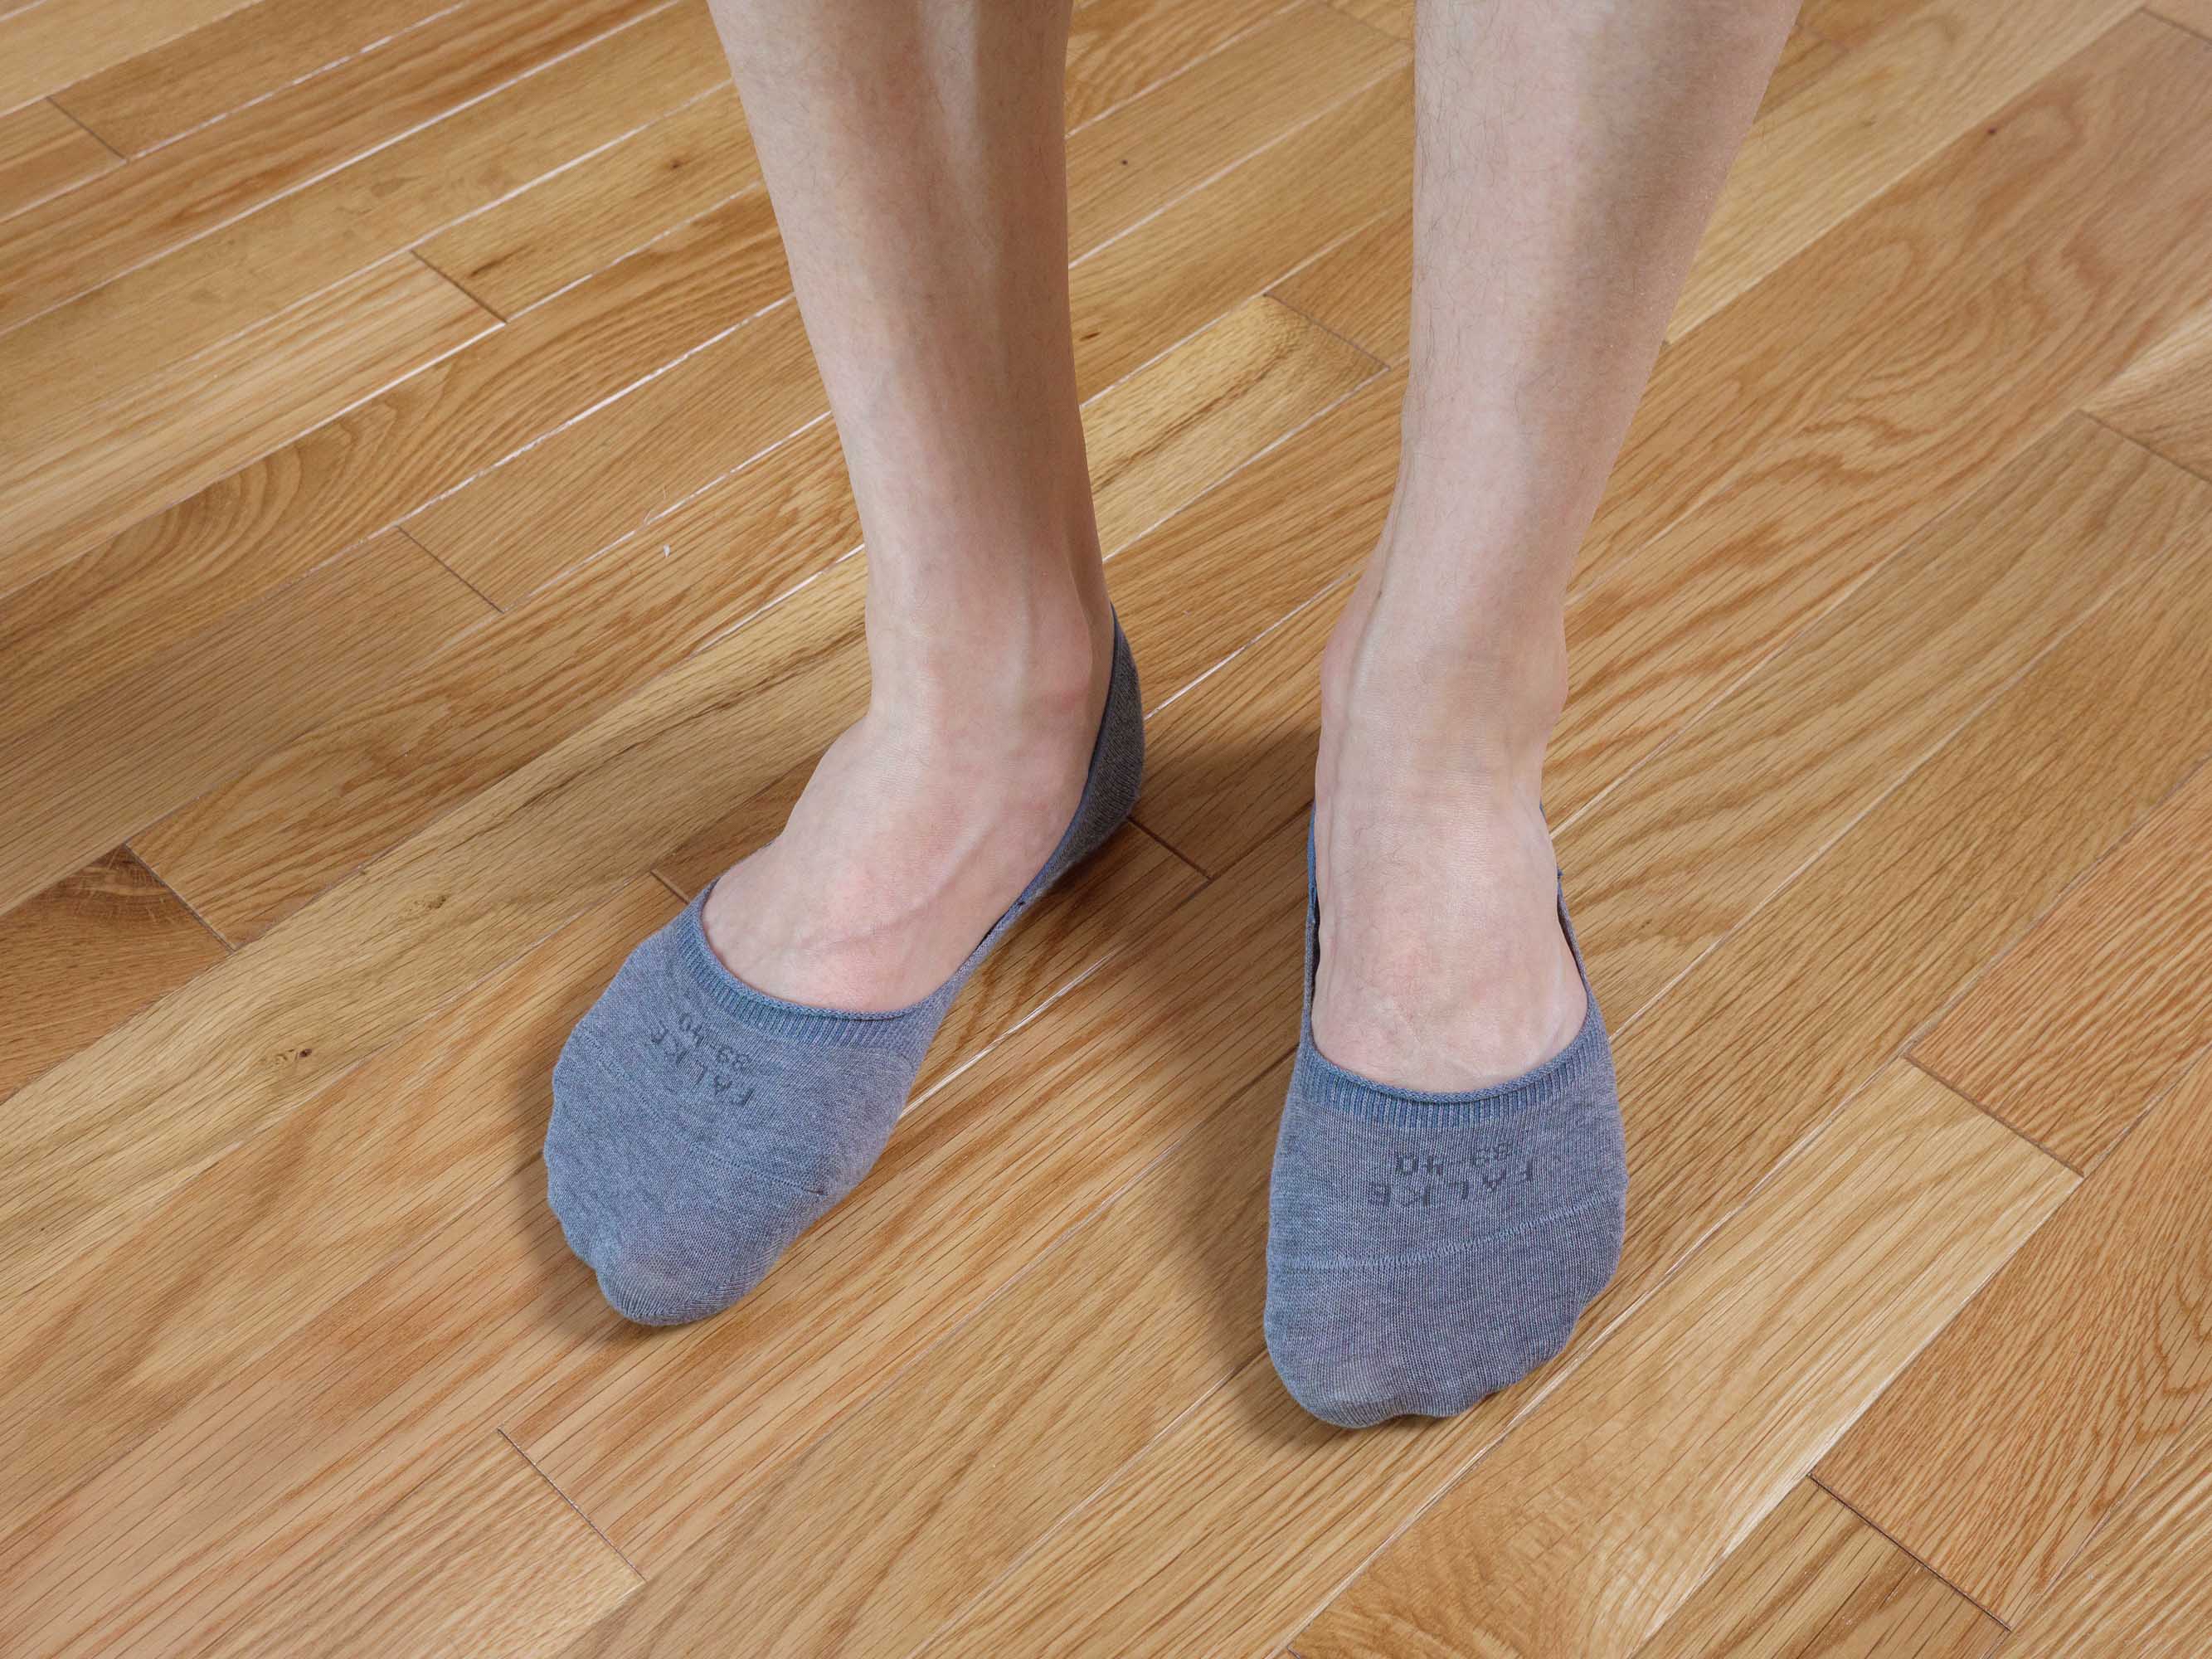  Loafer Socks